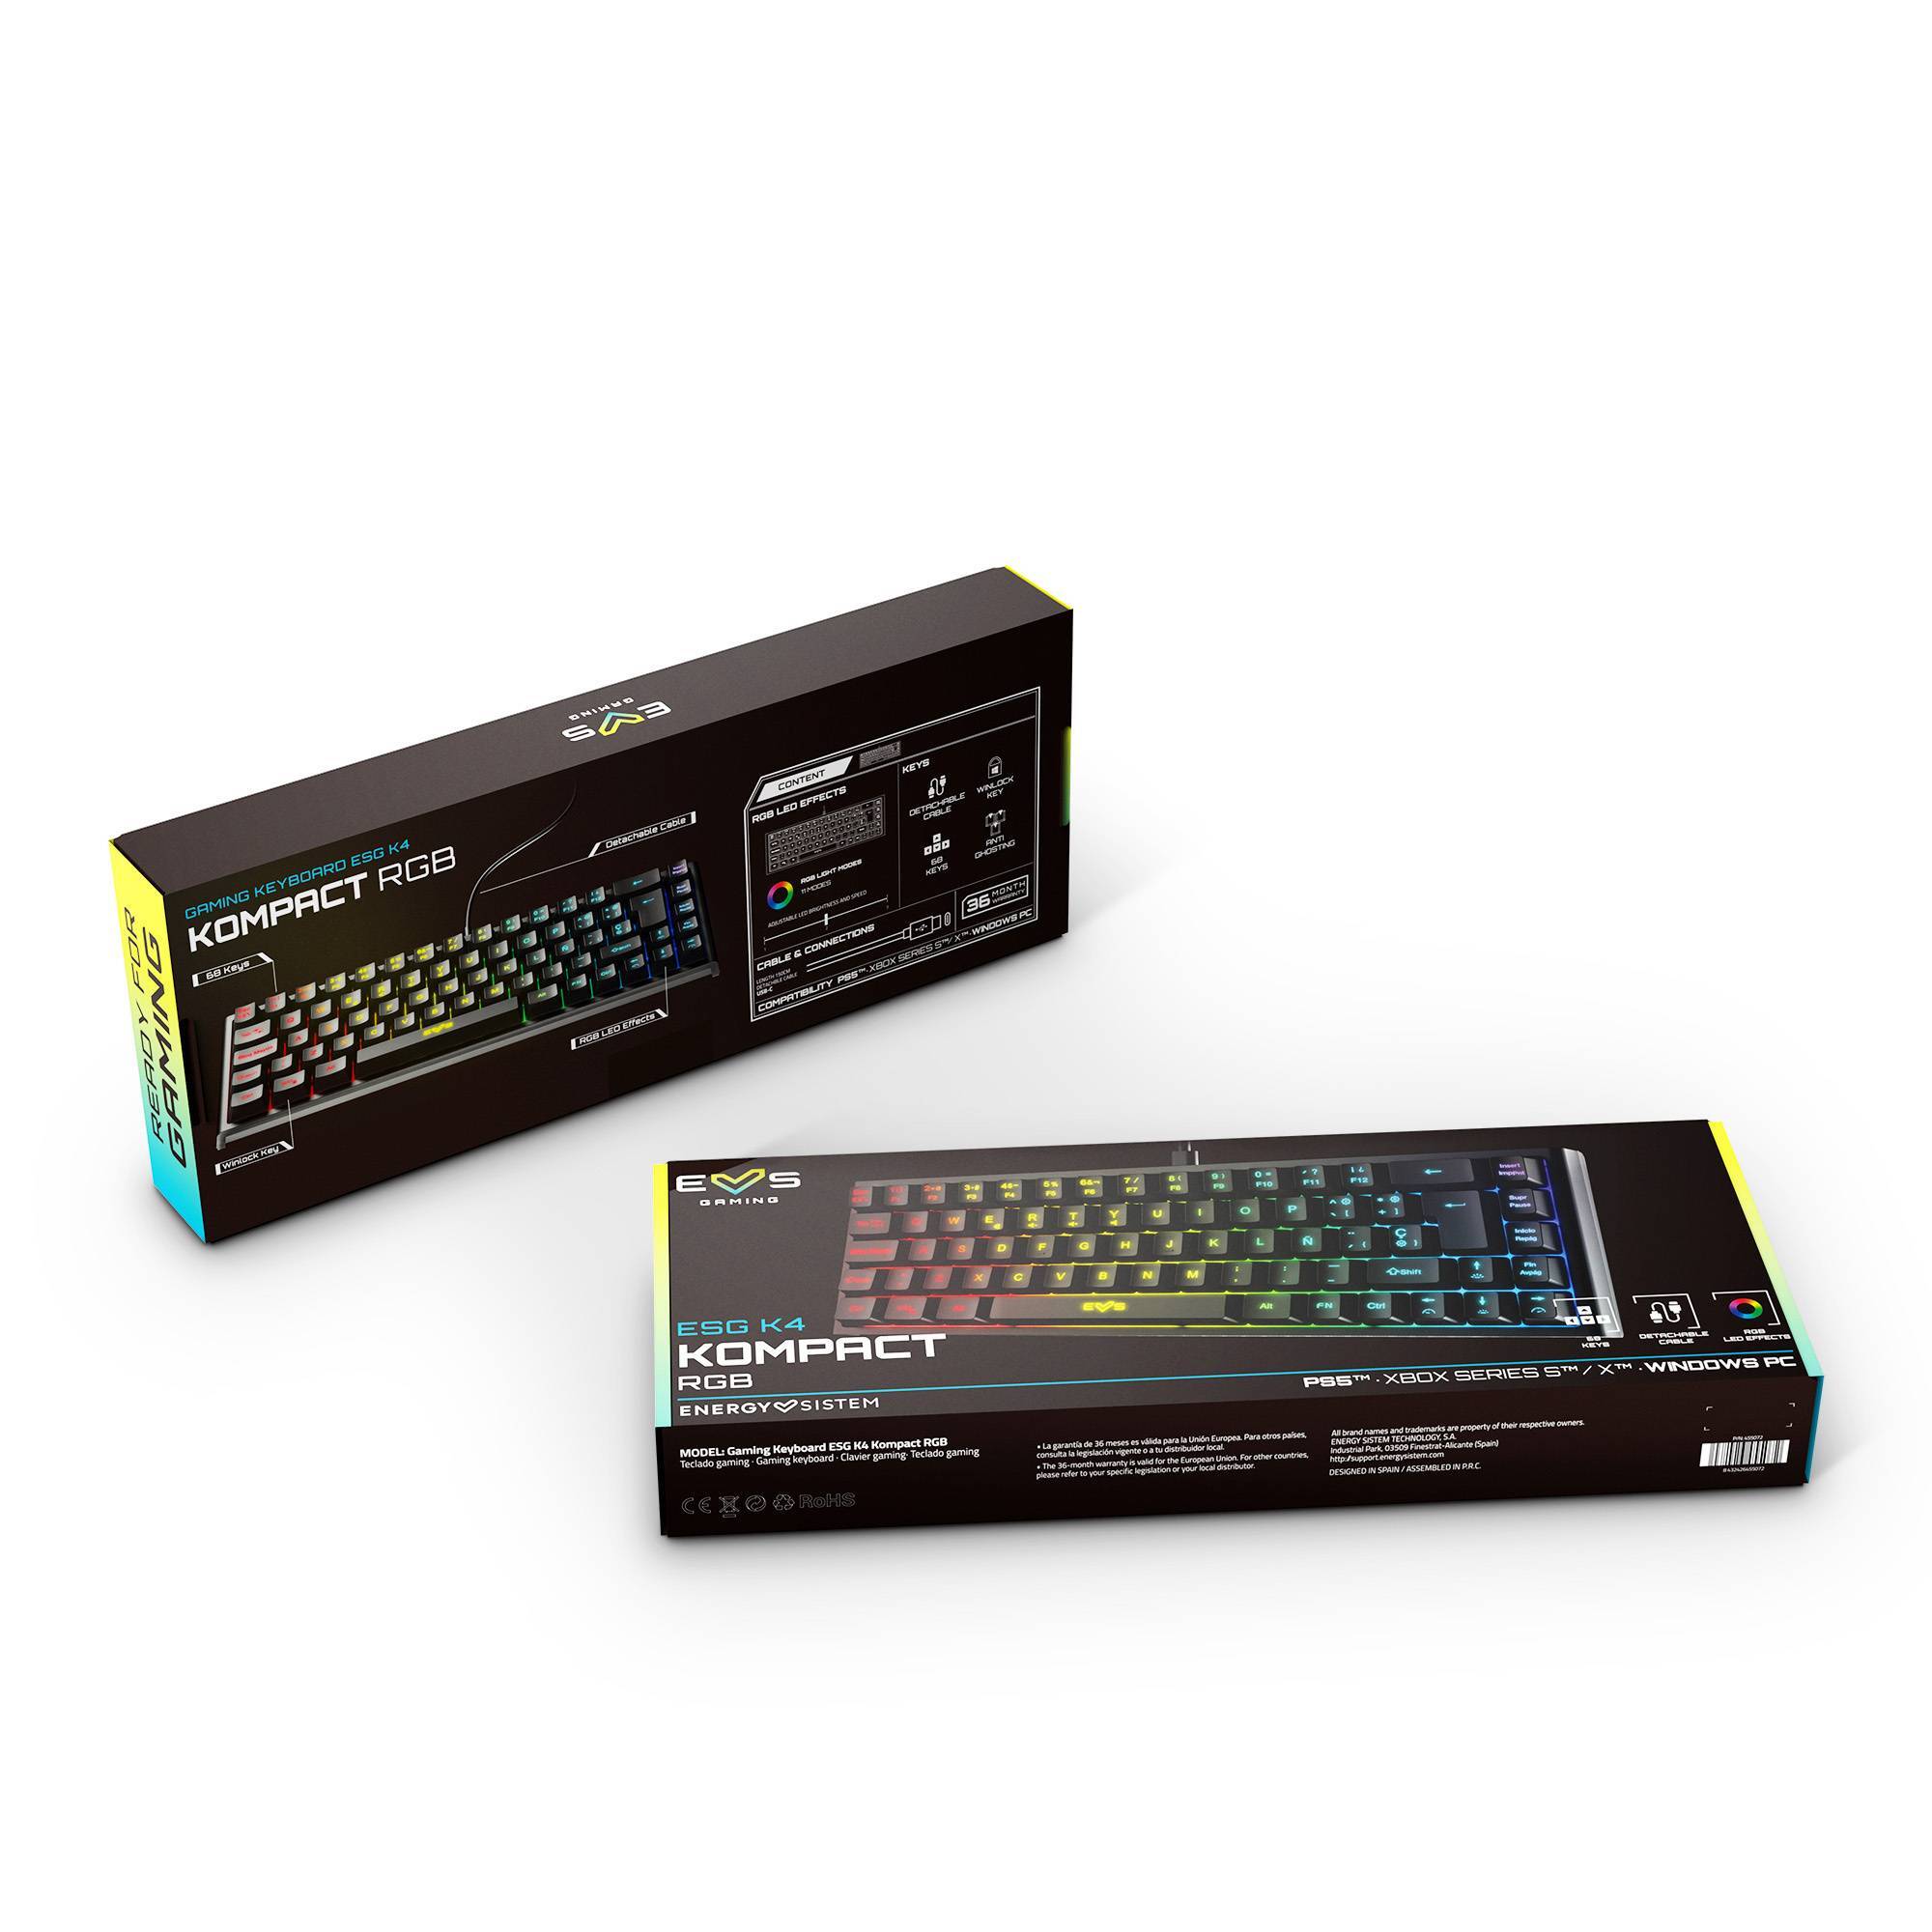 Black ESG K4 KOMPACT-RGB gaming keyboard's packaging